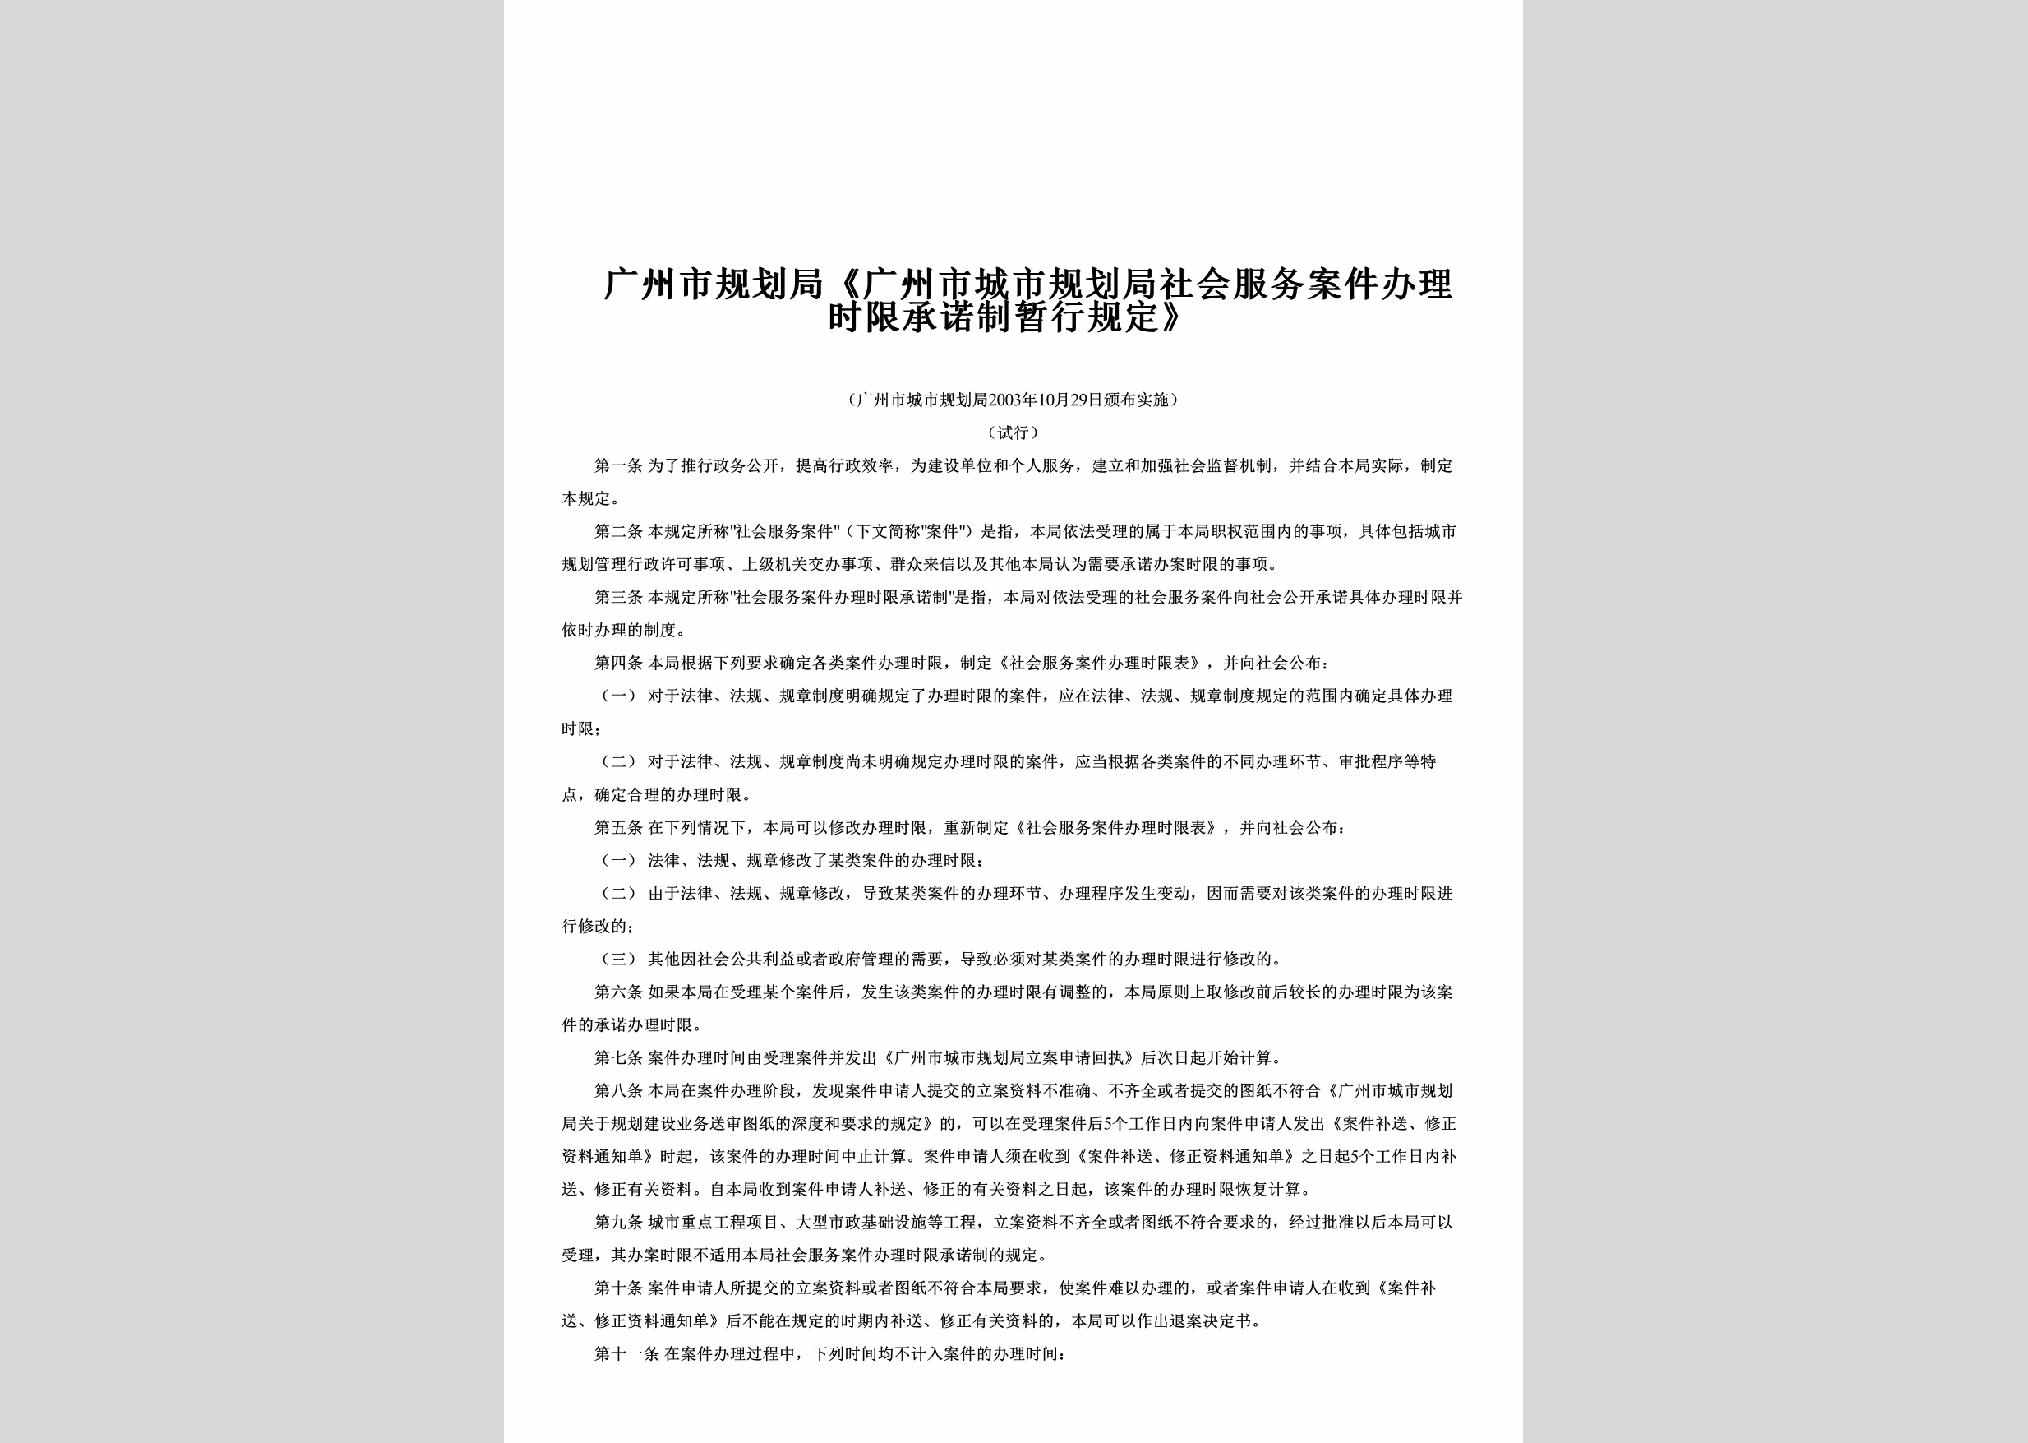 GD-GZSCSGHJ-2003：广州市规划局《广州市城市规划局社会服务案件办理时限承诺制暂行规定》